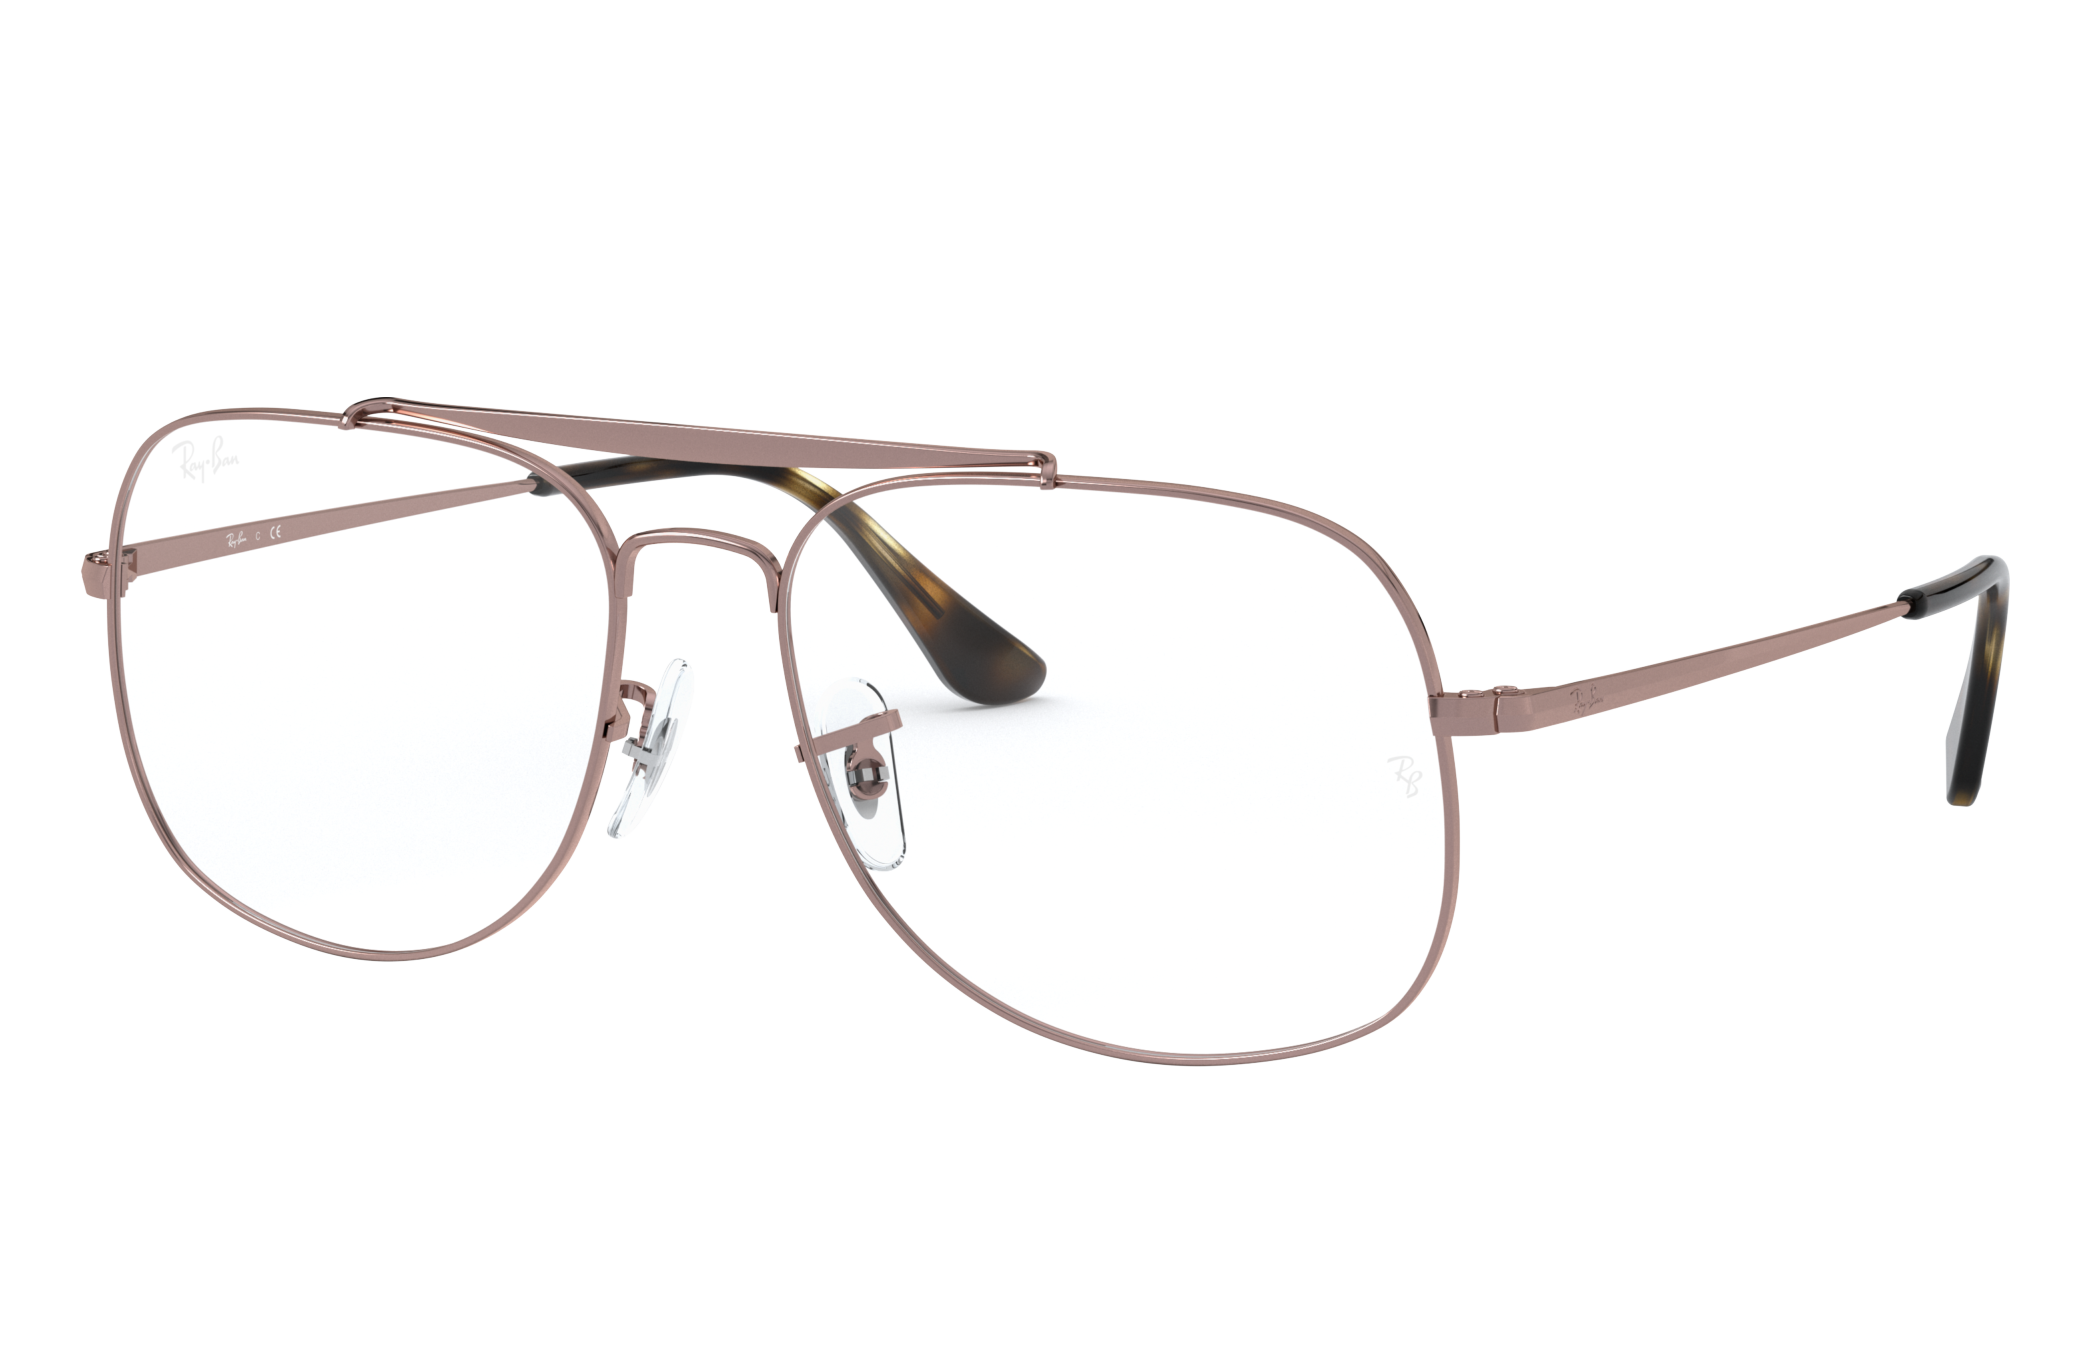 General Optics Eyeglasses with Light Brown Frame - RB6389 | Ray-Ban®